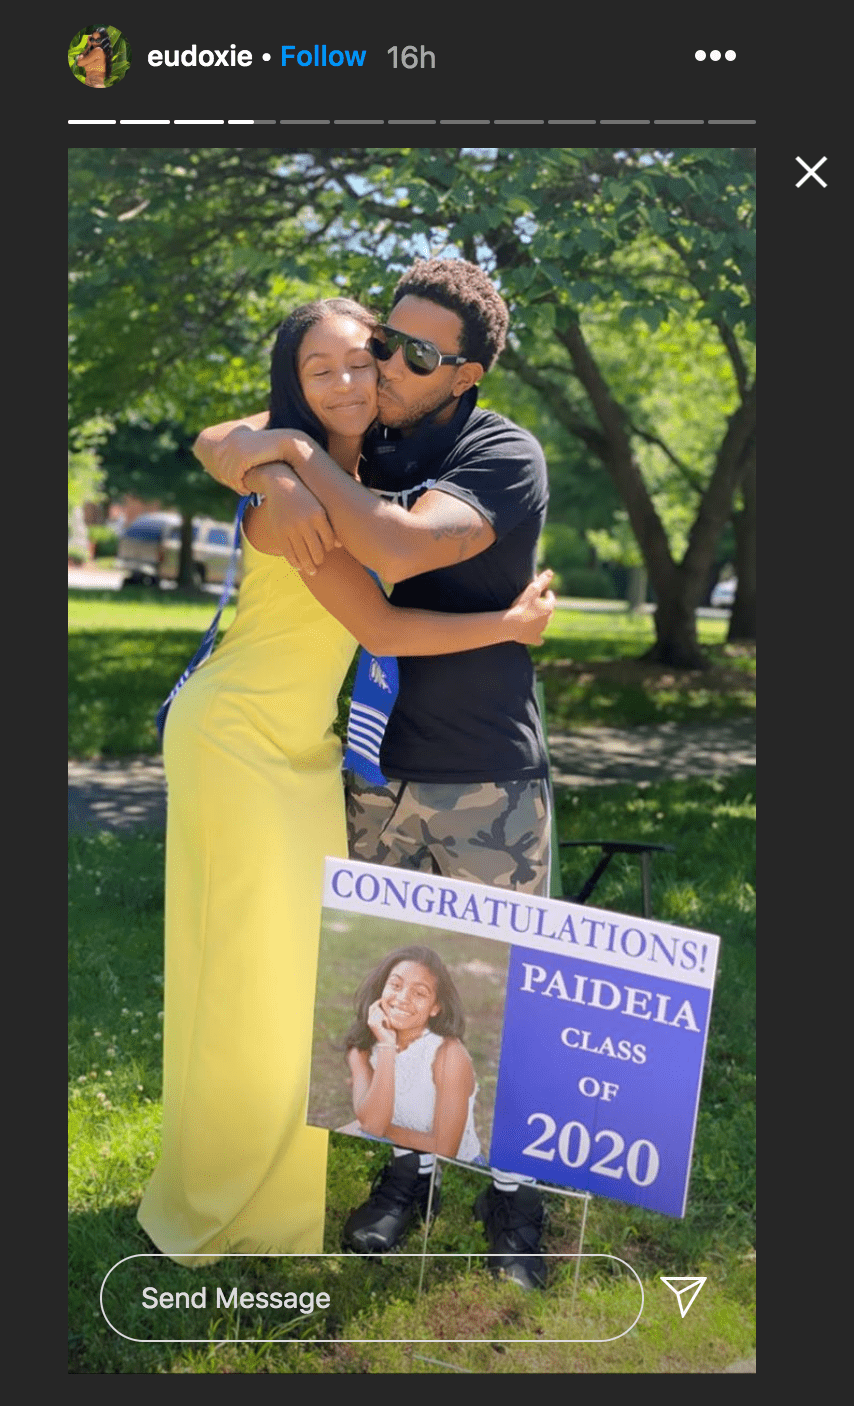 Ludacris posed with his daughter Karma Bridges at the high school graduation for the Paideia class of 2020 | Source: Instagram.com/ludacris